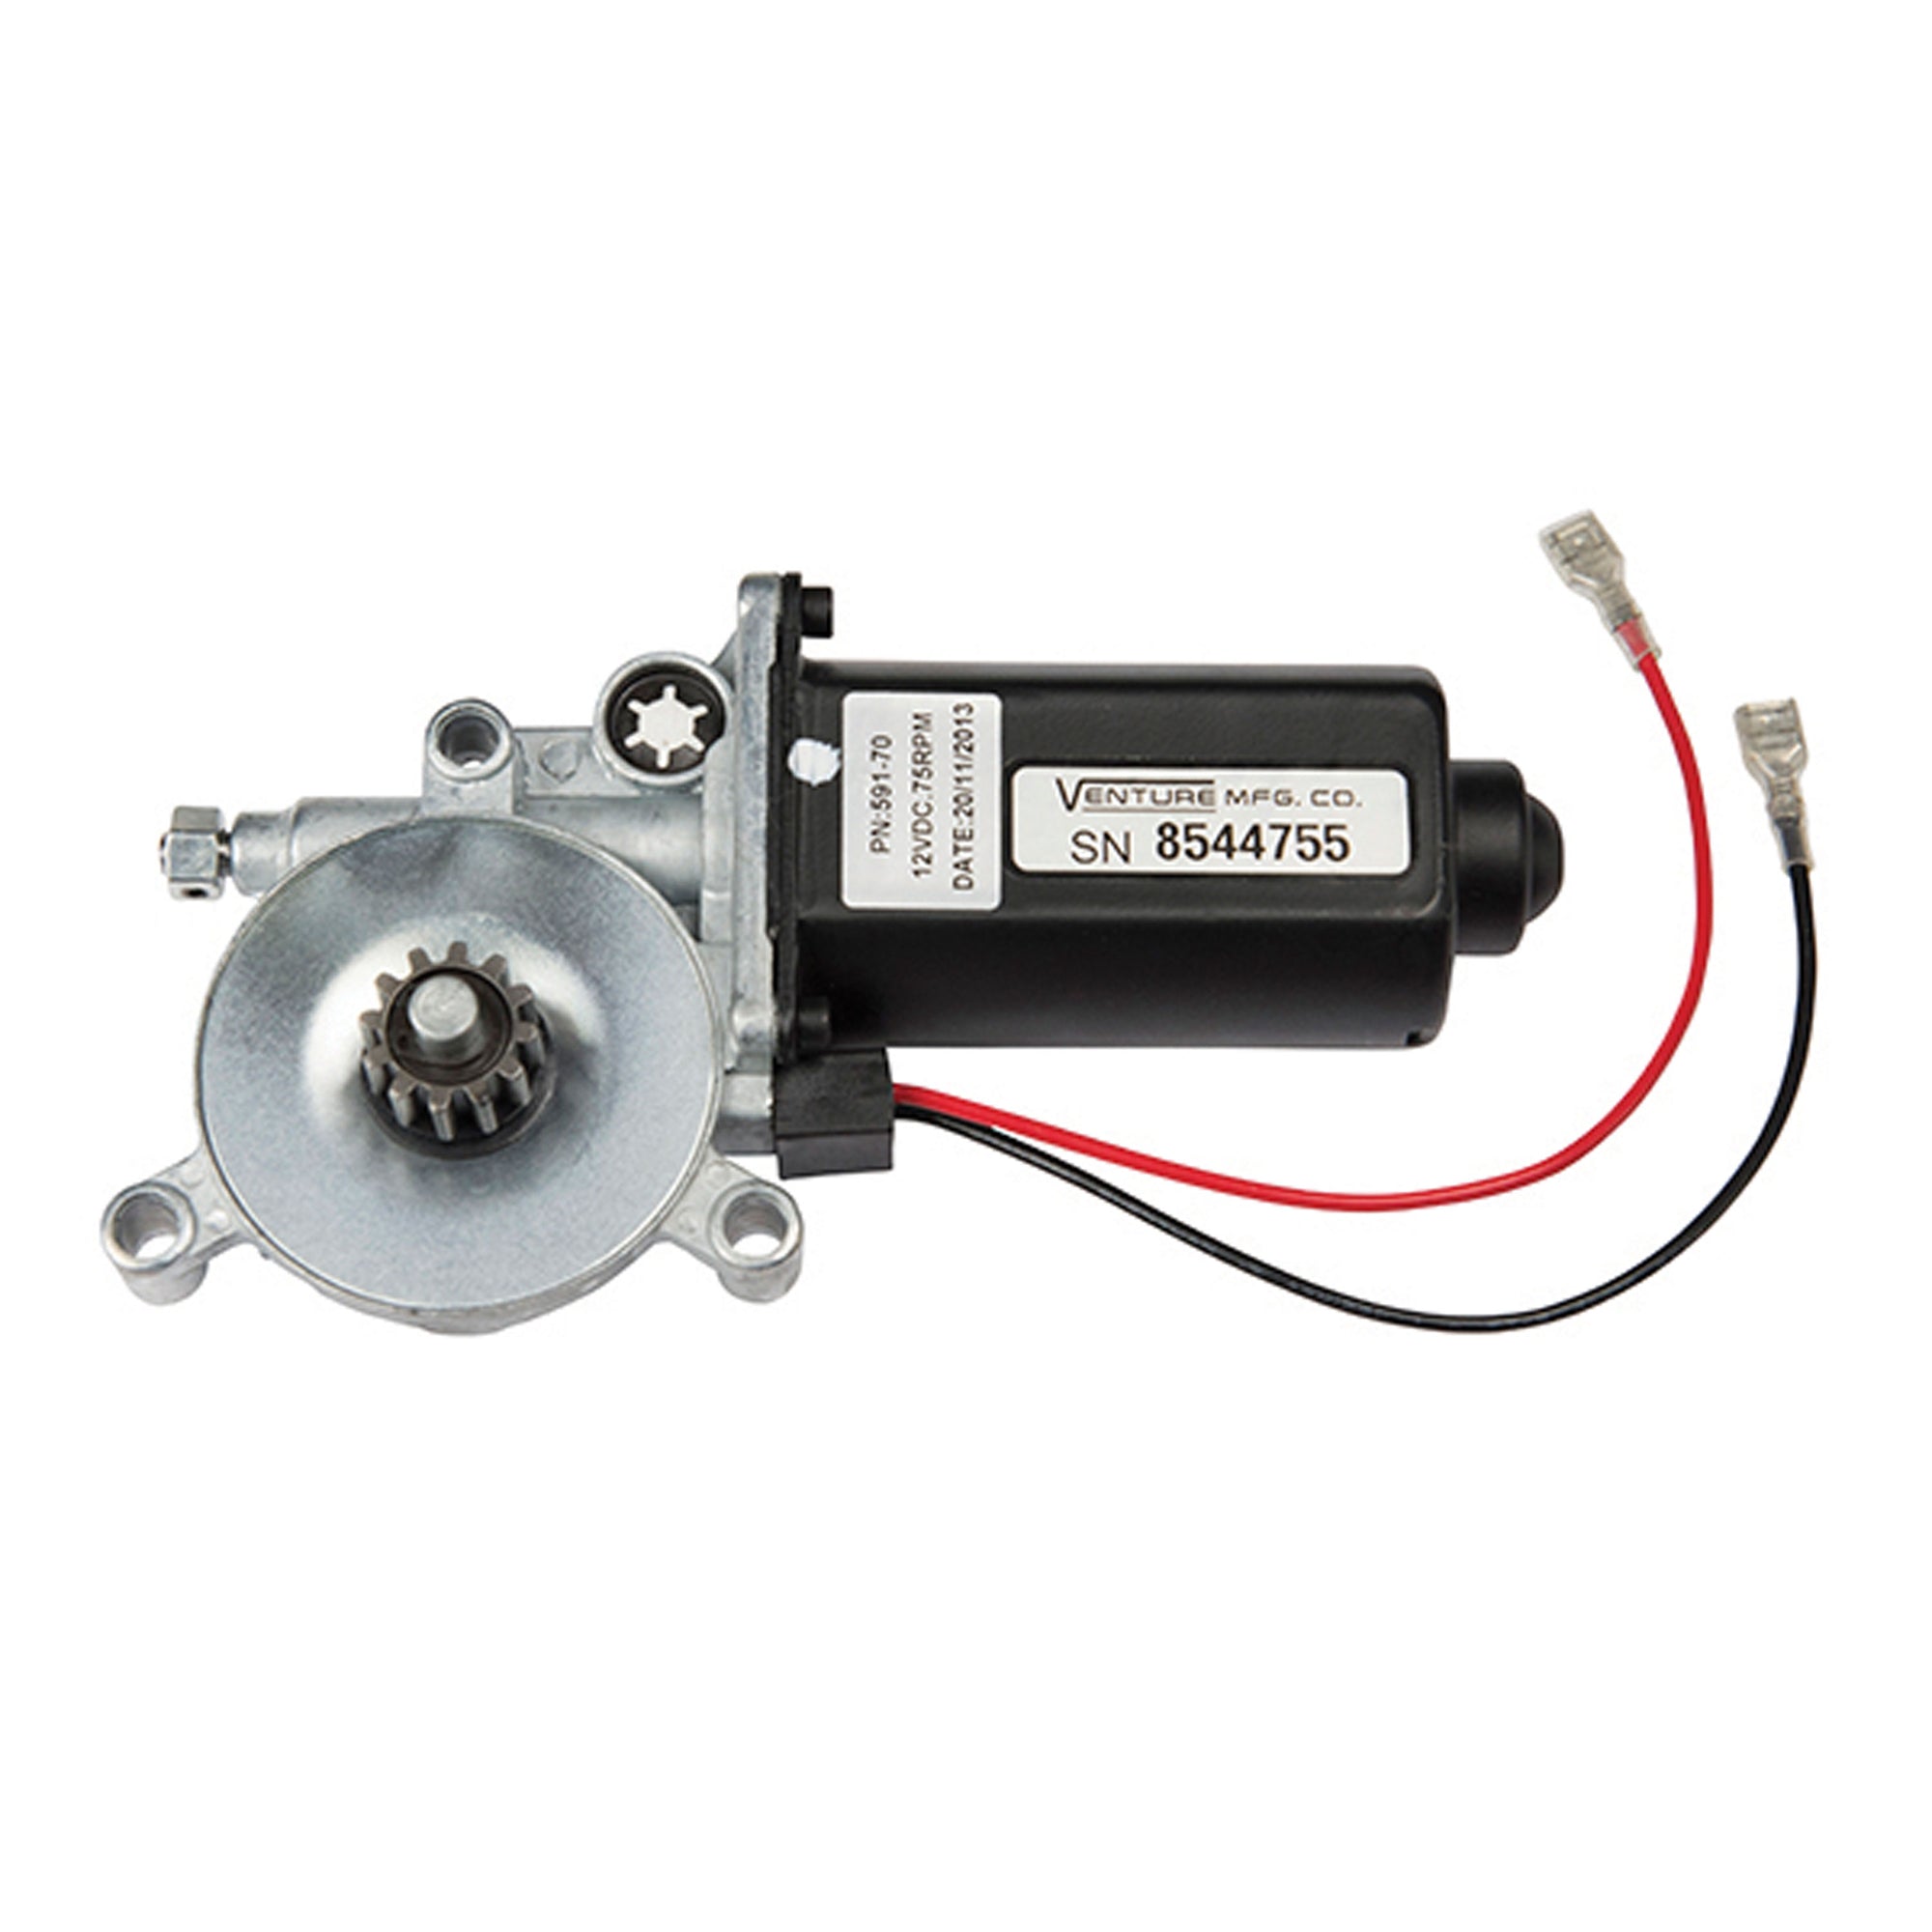 Lippert 266149 Solera Power Awning Replacement Motor